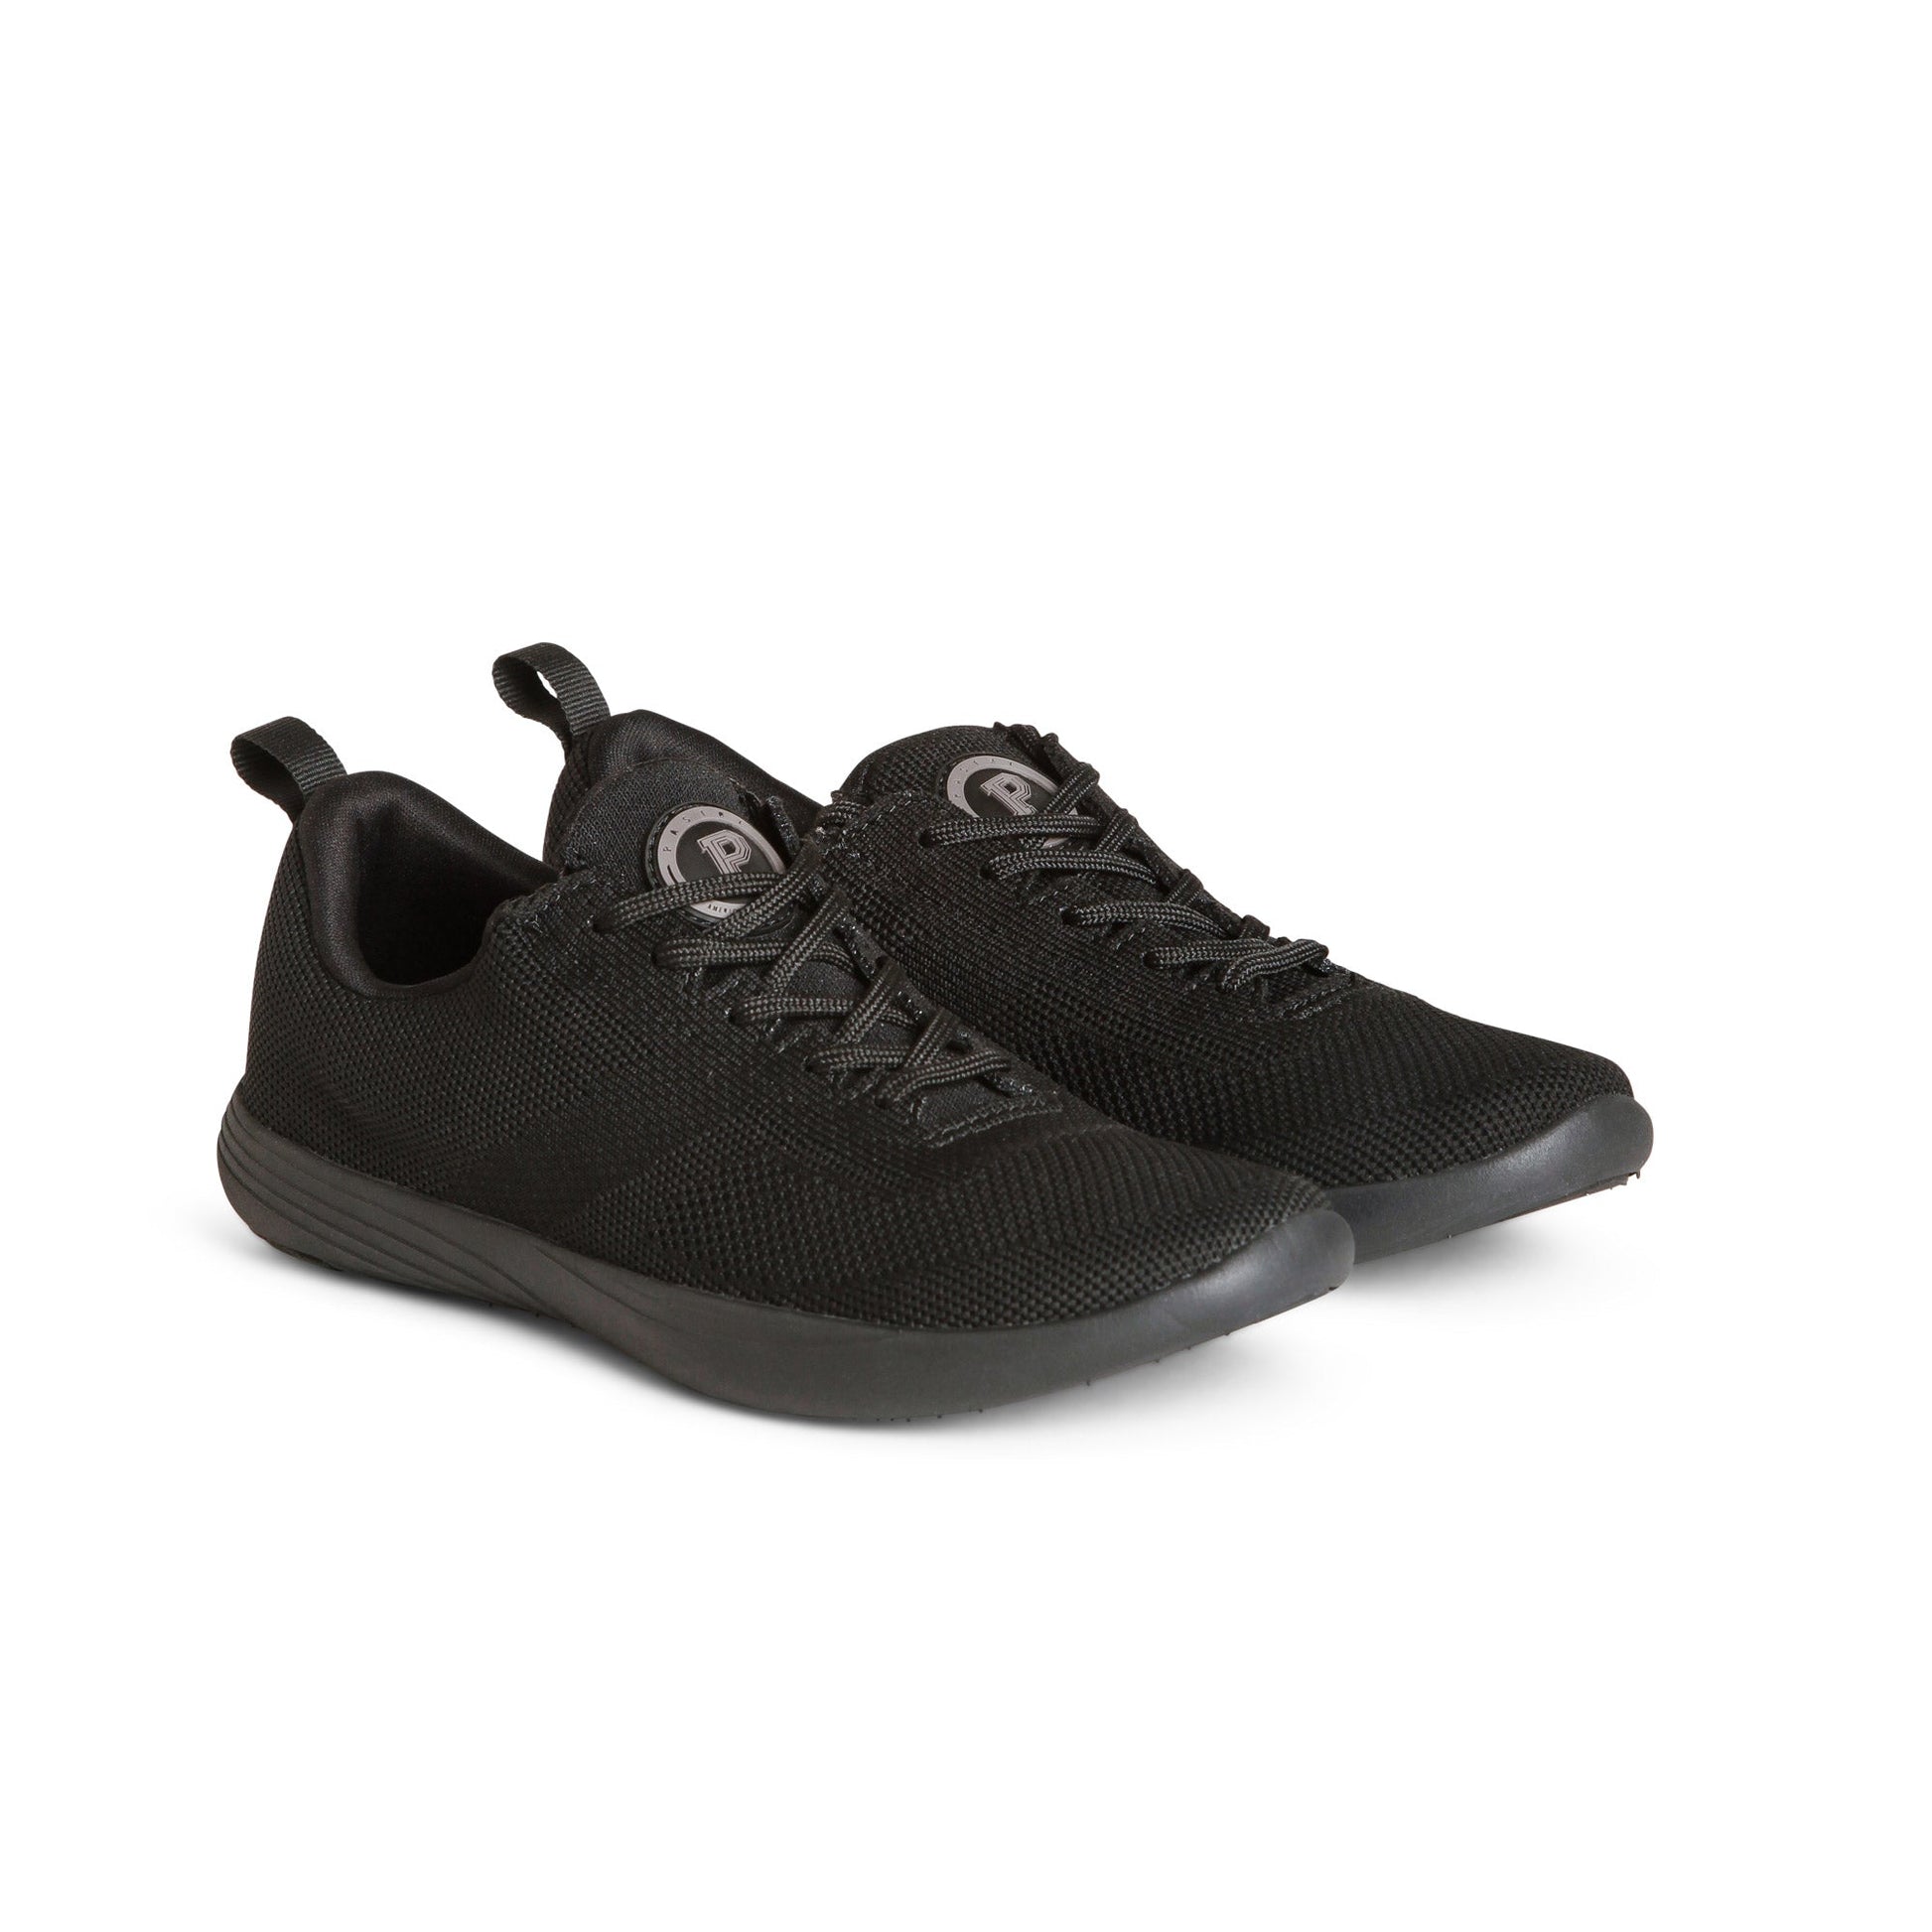 Pair of Pastry Studio TR2 Adult Women's Sneaker in Black/Black